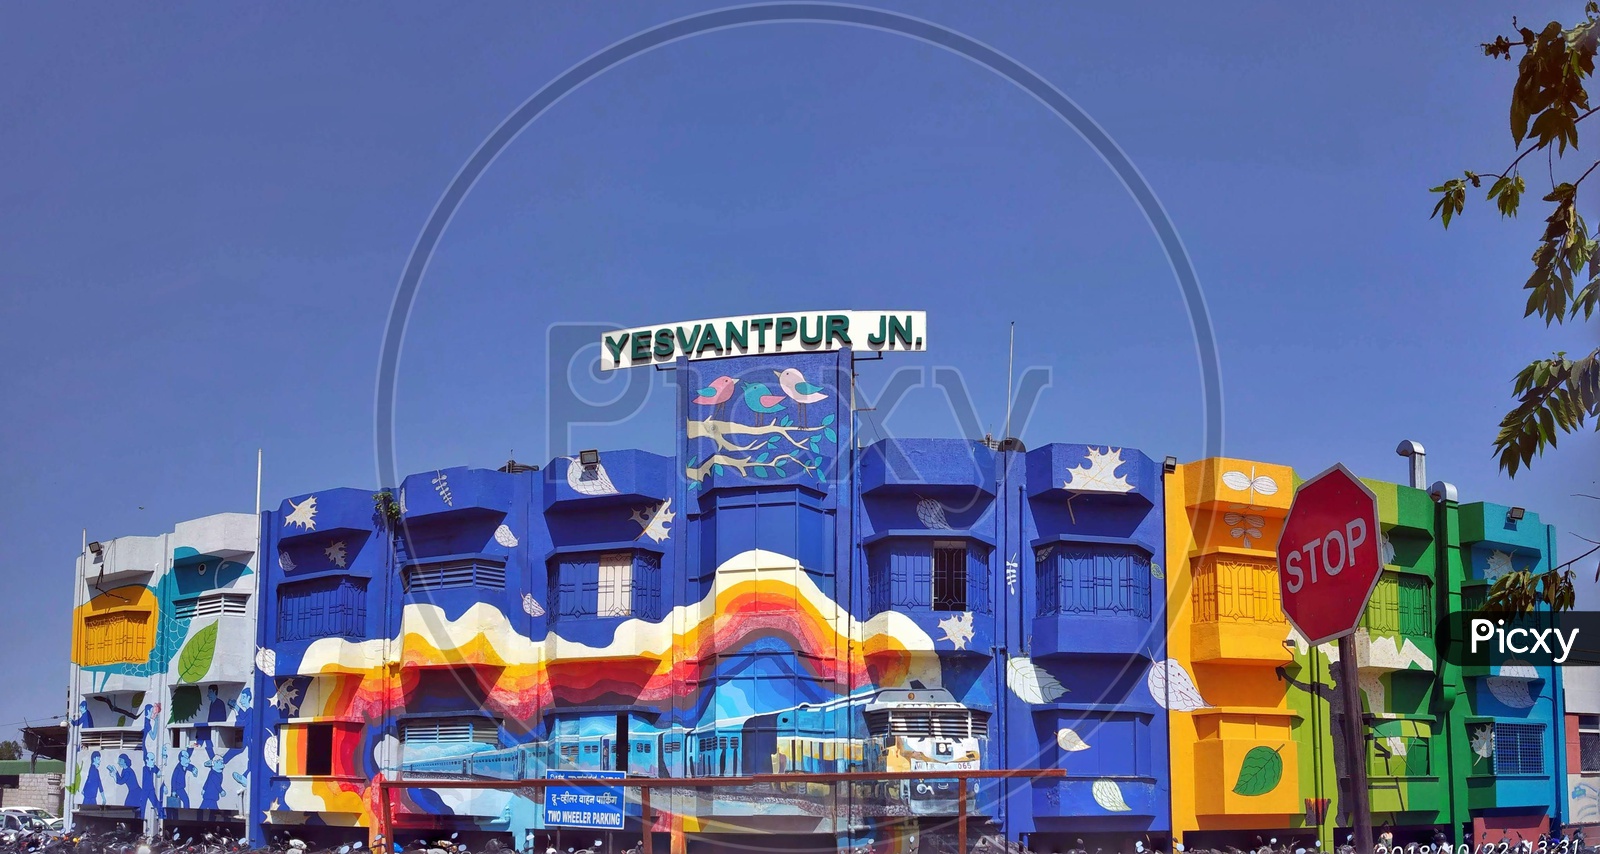 front facade of yesvantpur railway station.